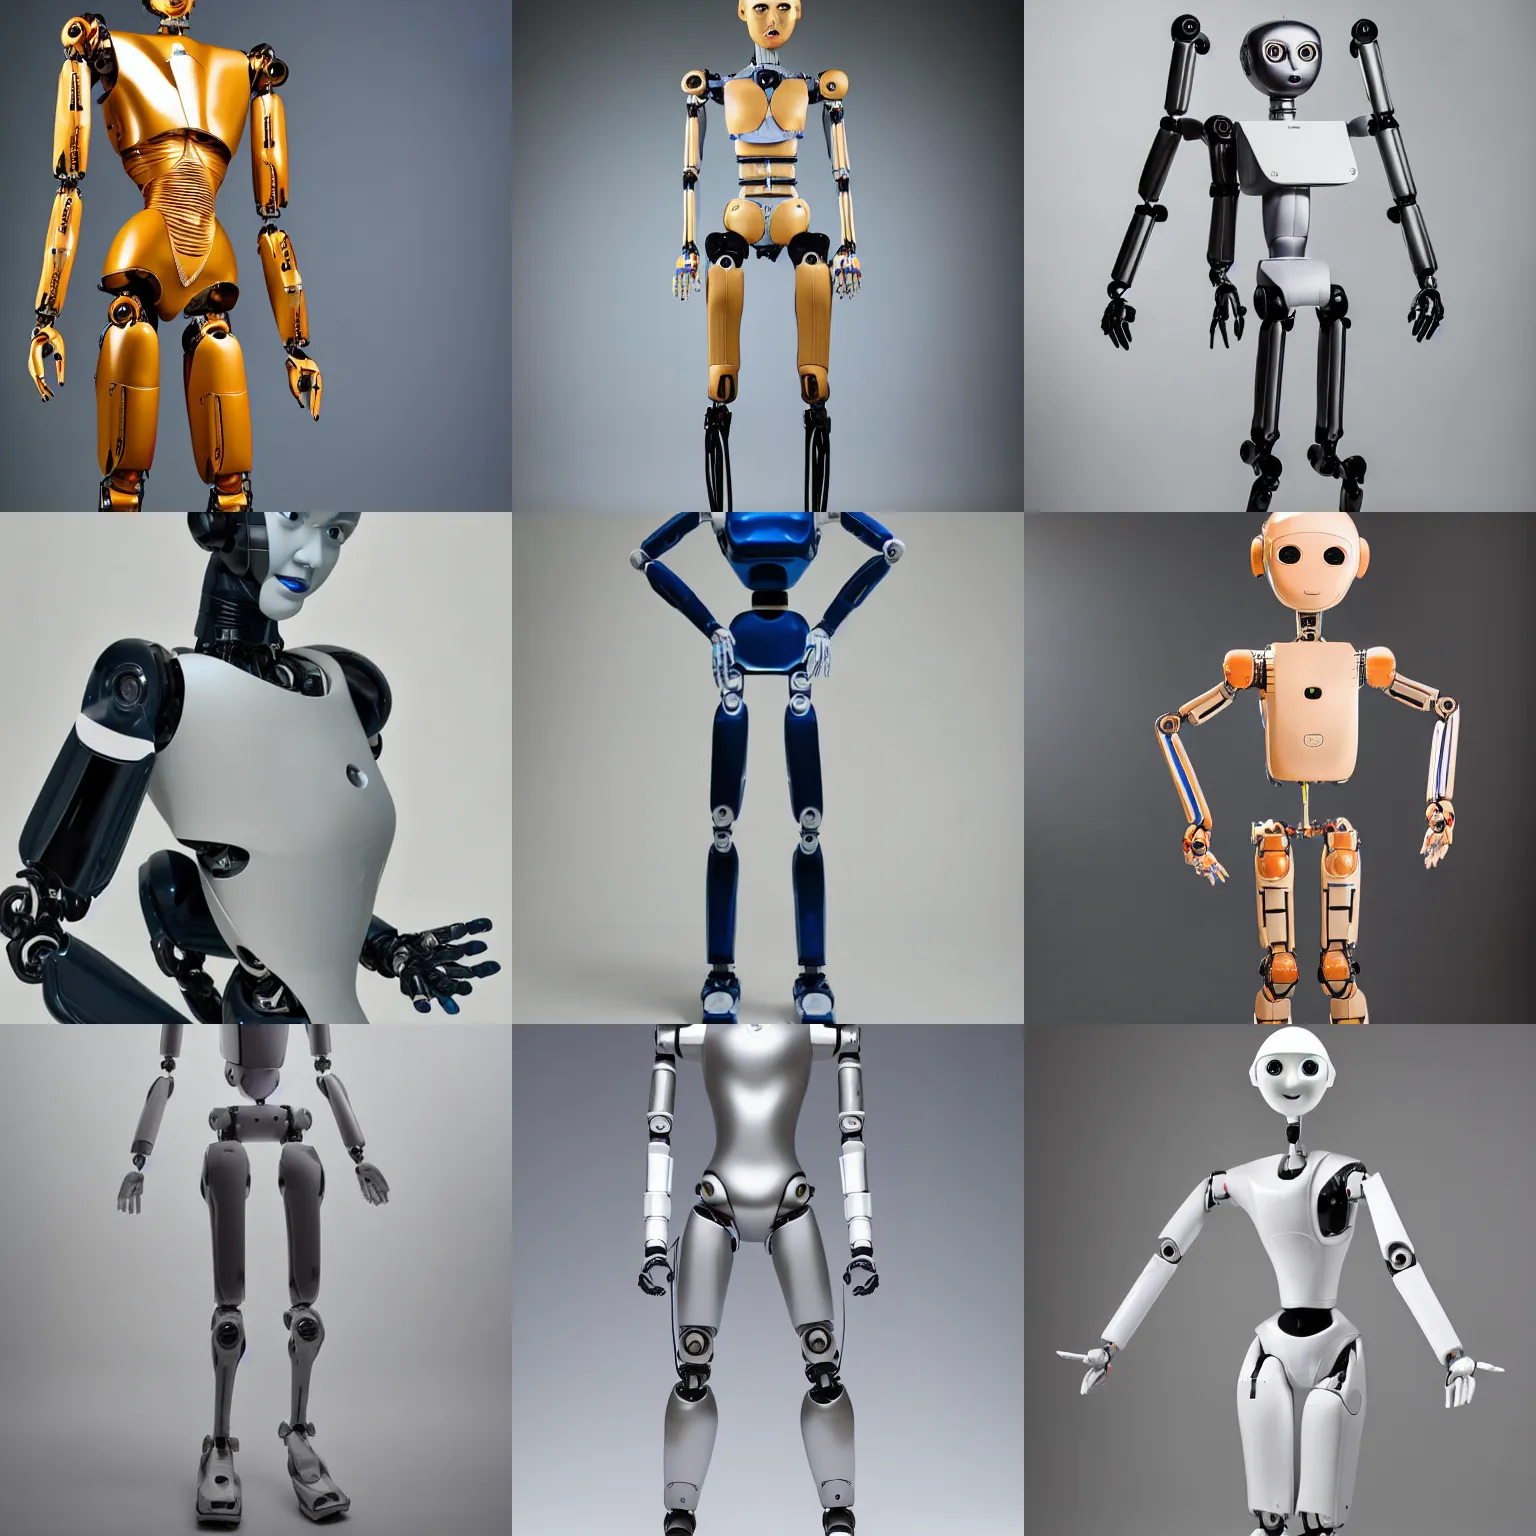 Prompt: a slim humanoid robot, studio photography